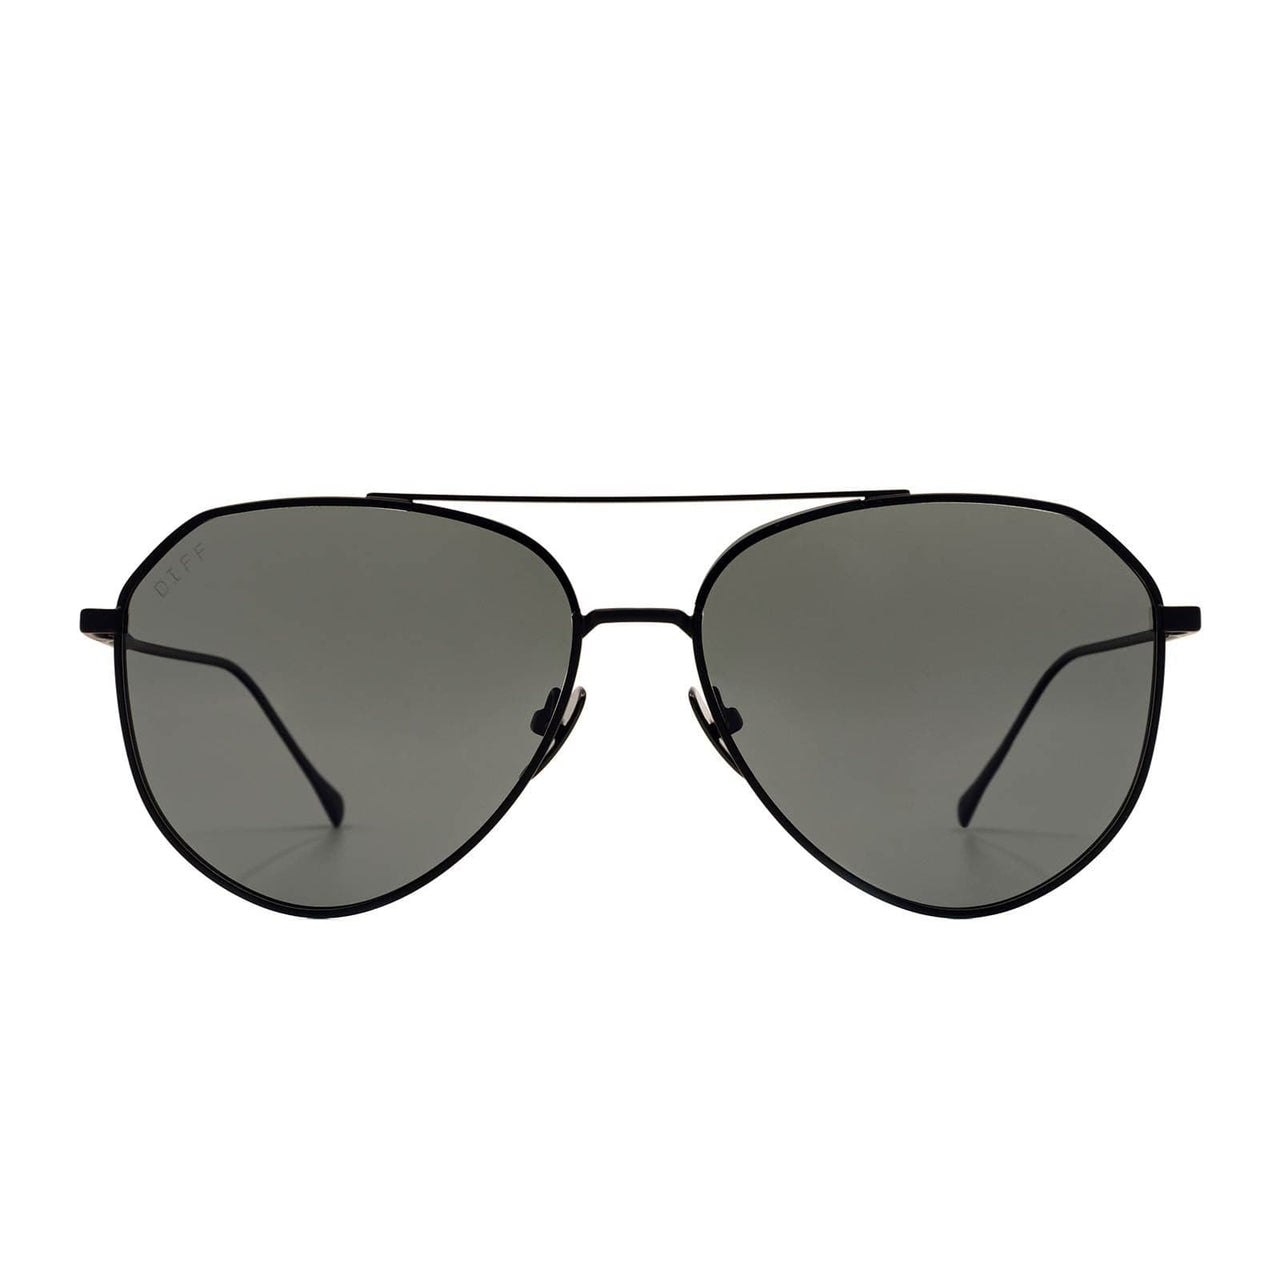 Dash Matte Black and Grey Sunglasses, Sunglasses by DIFF Sunglasses | LIT Boutique